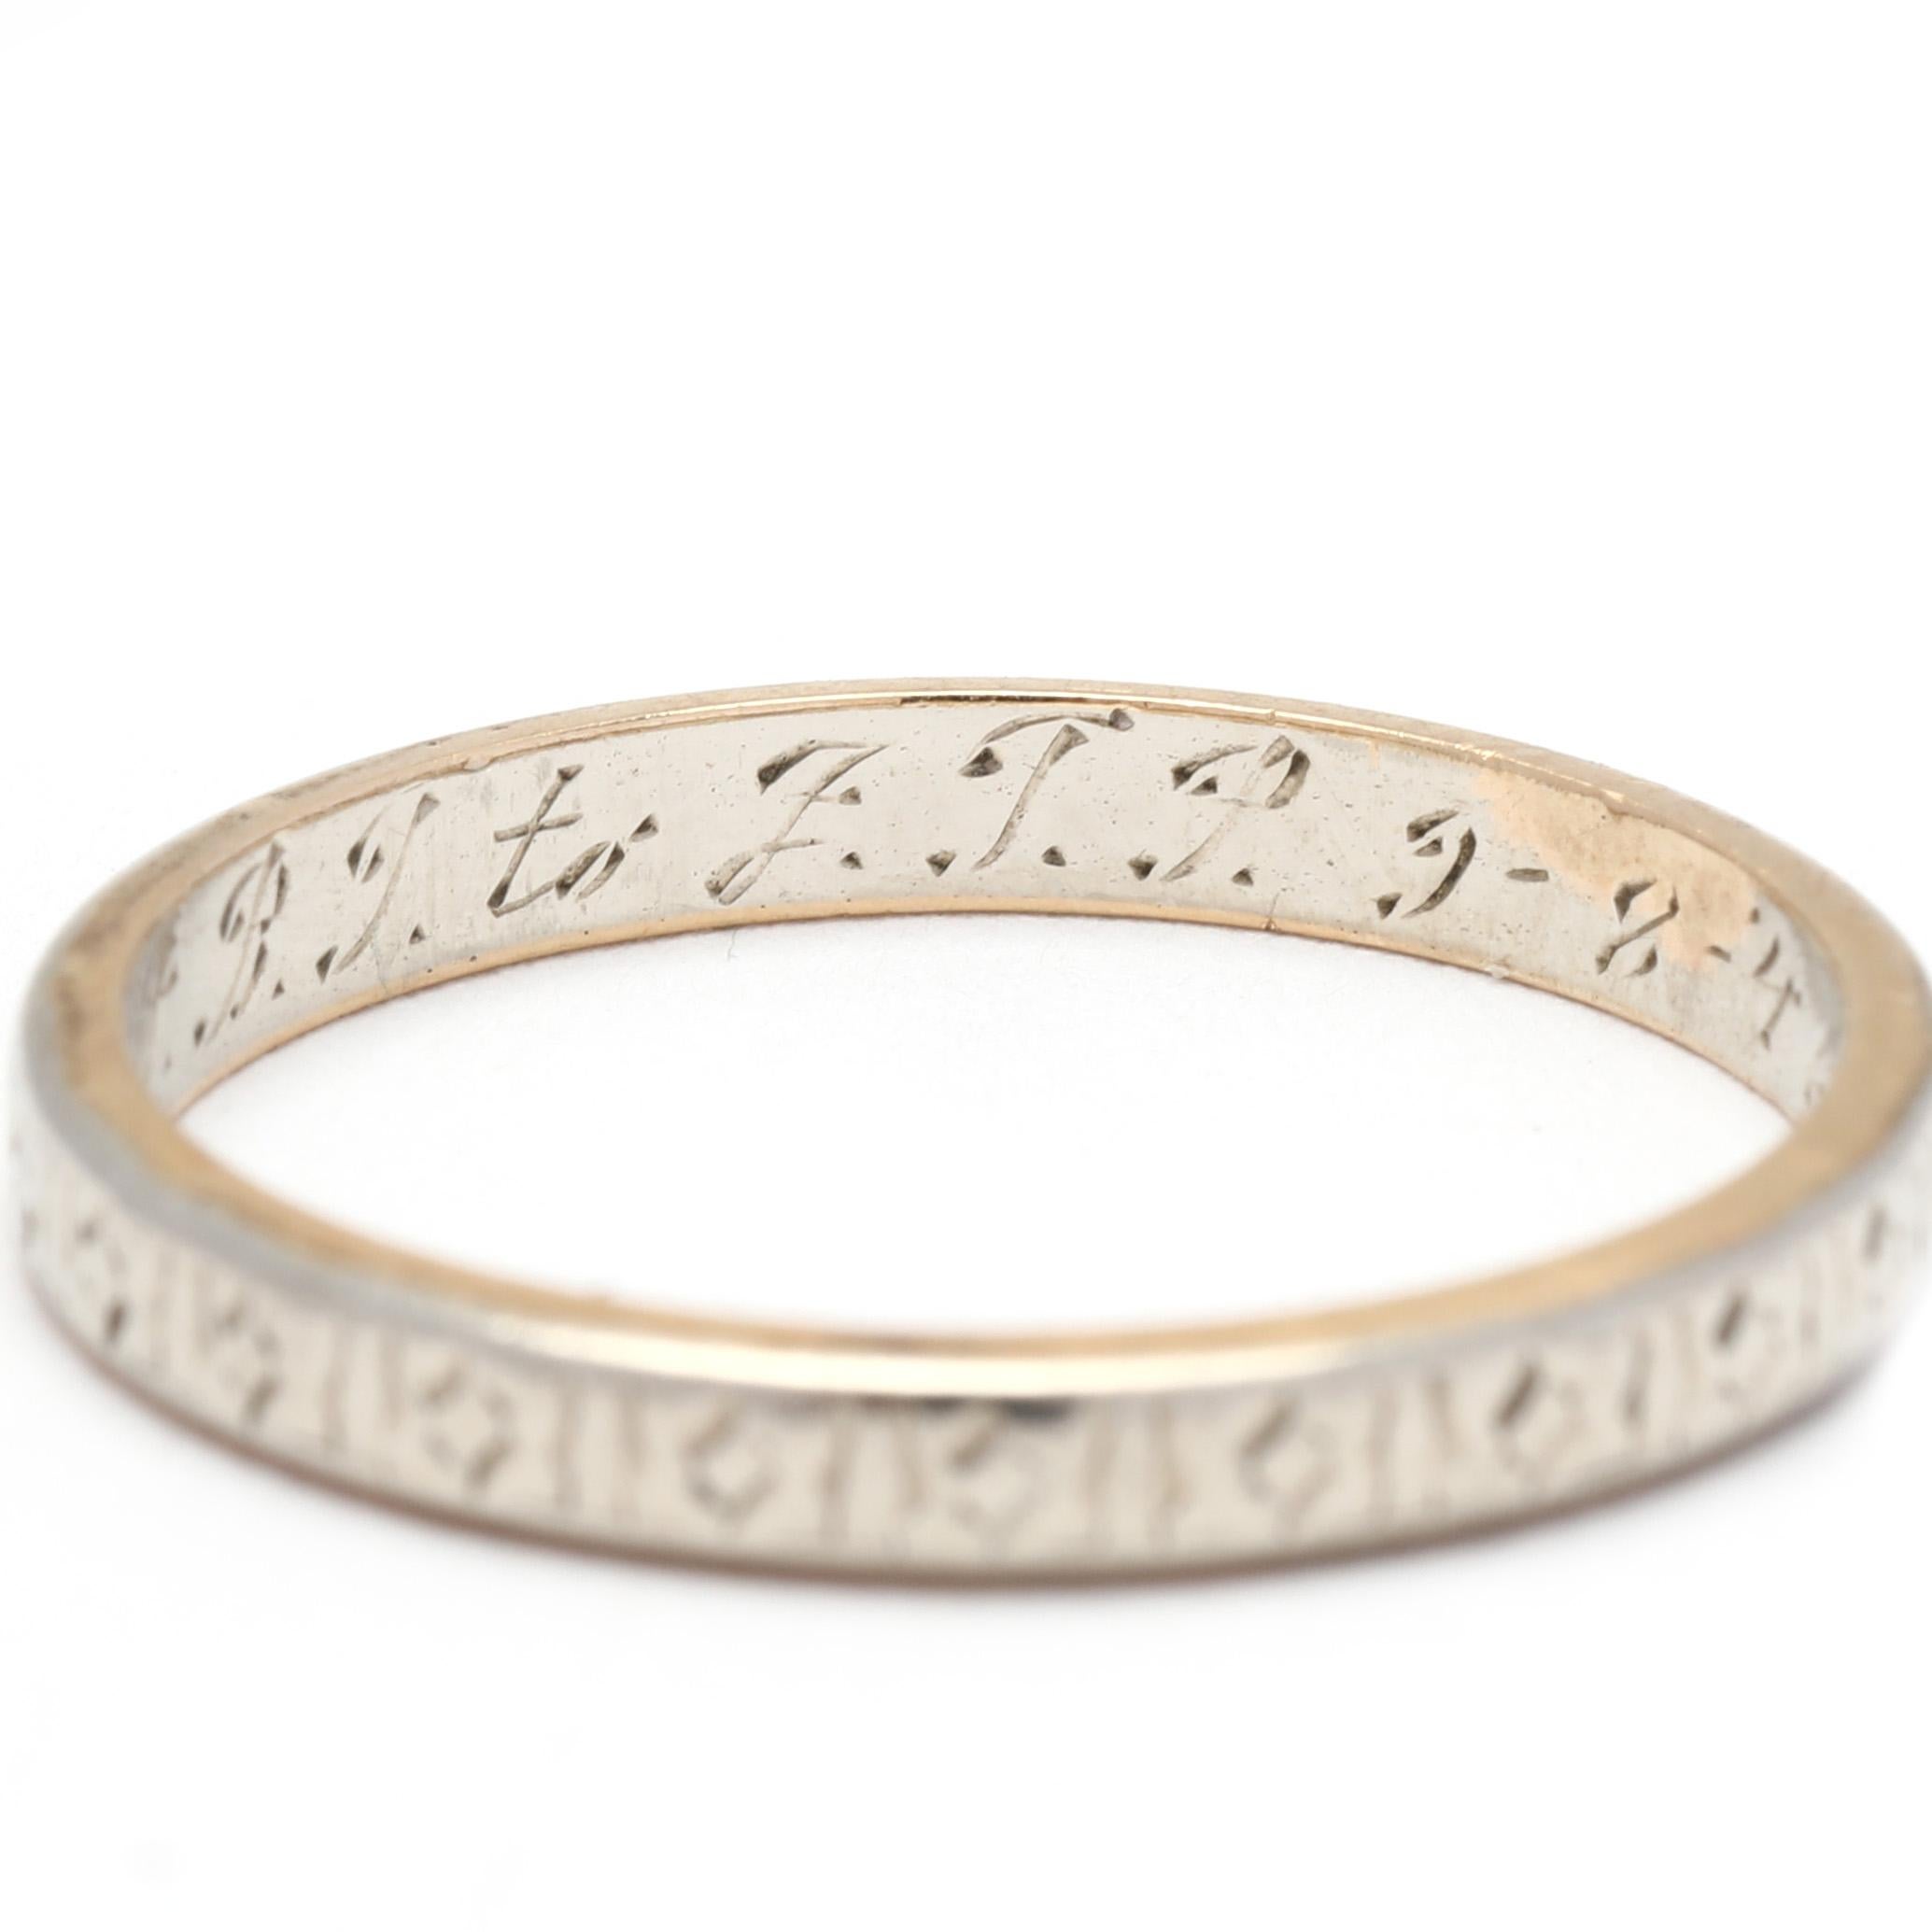 Gravur 14k Gold Bandring, Ring Größe 5,75, Ehering, datiert 9-8-46 im Angebot 1